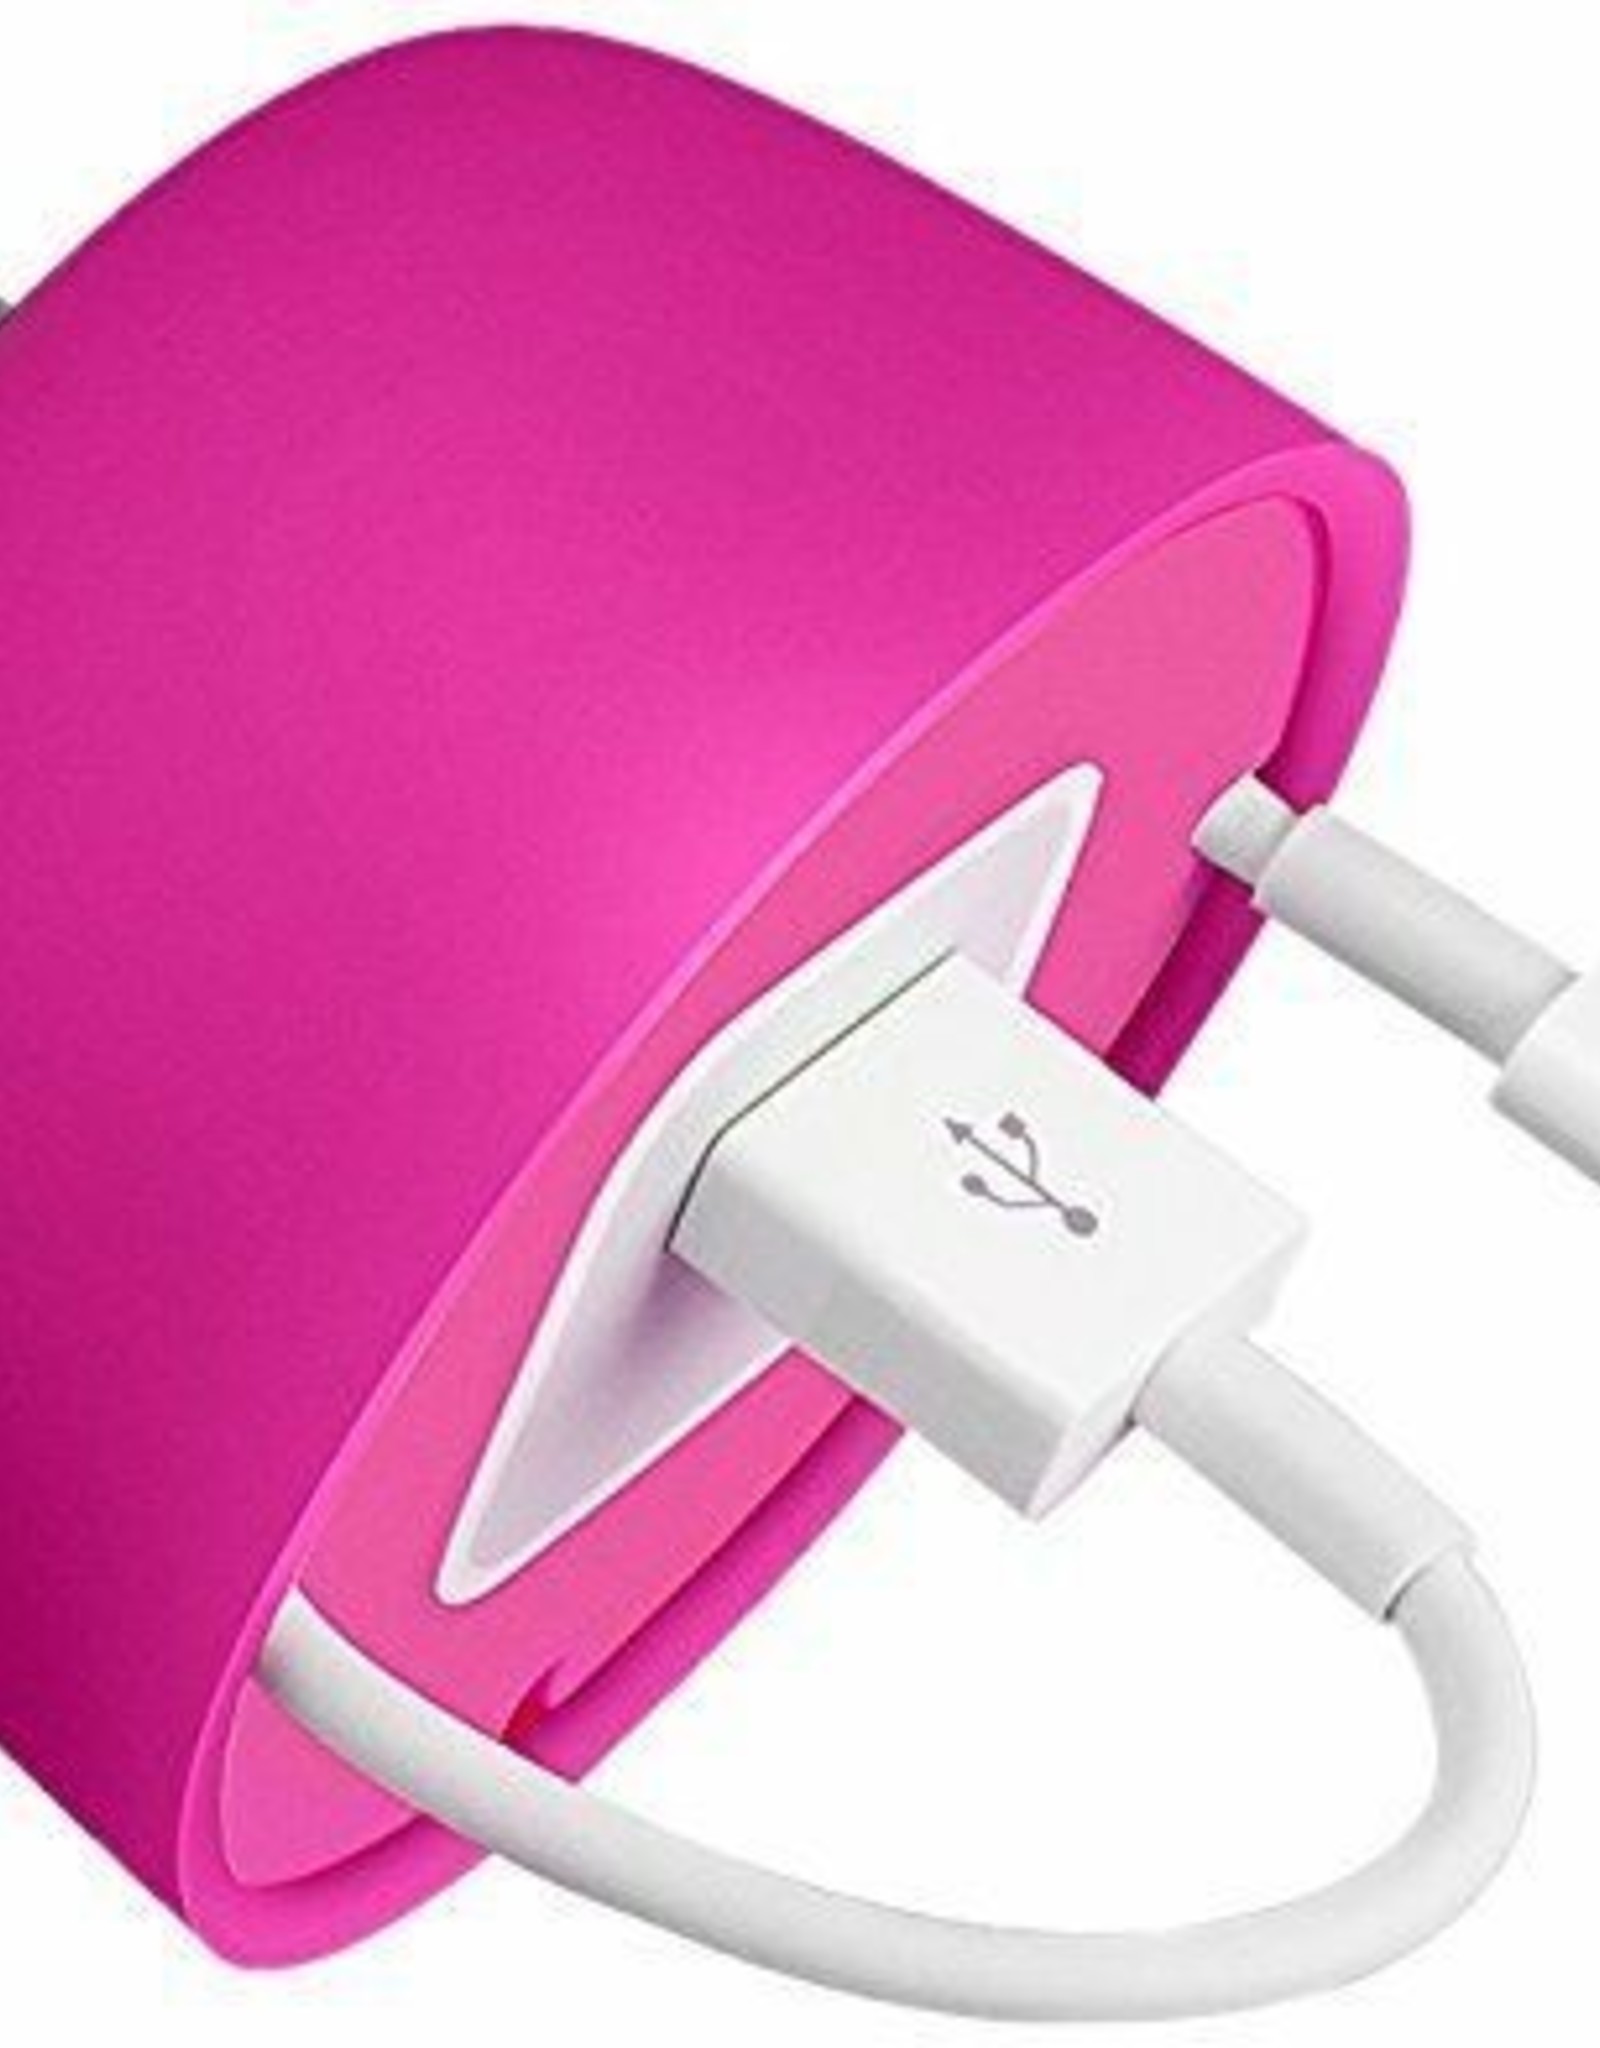 Powercurl charger Apple USB